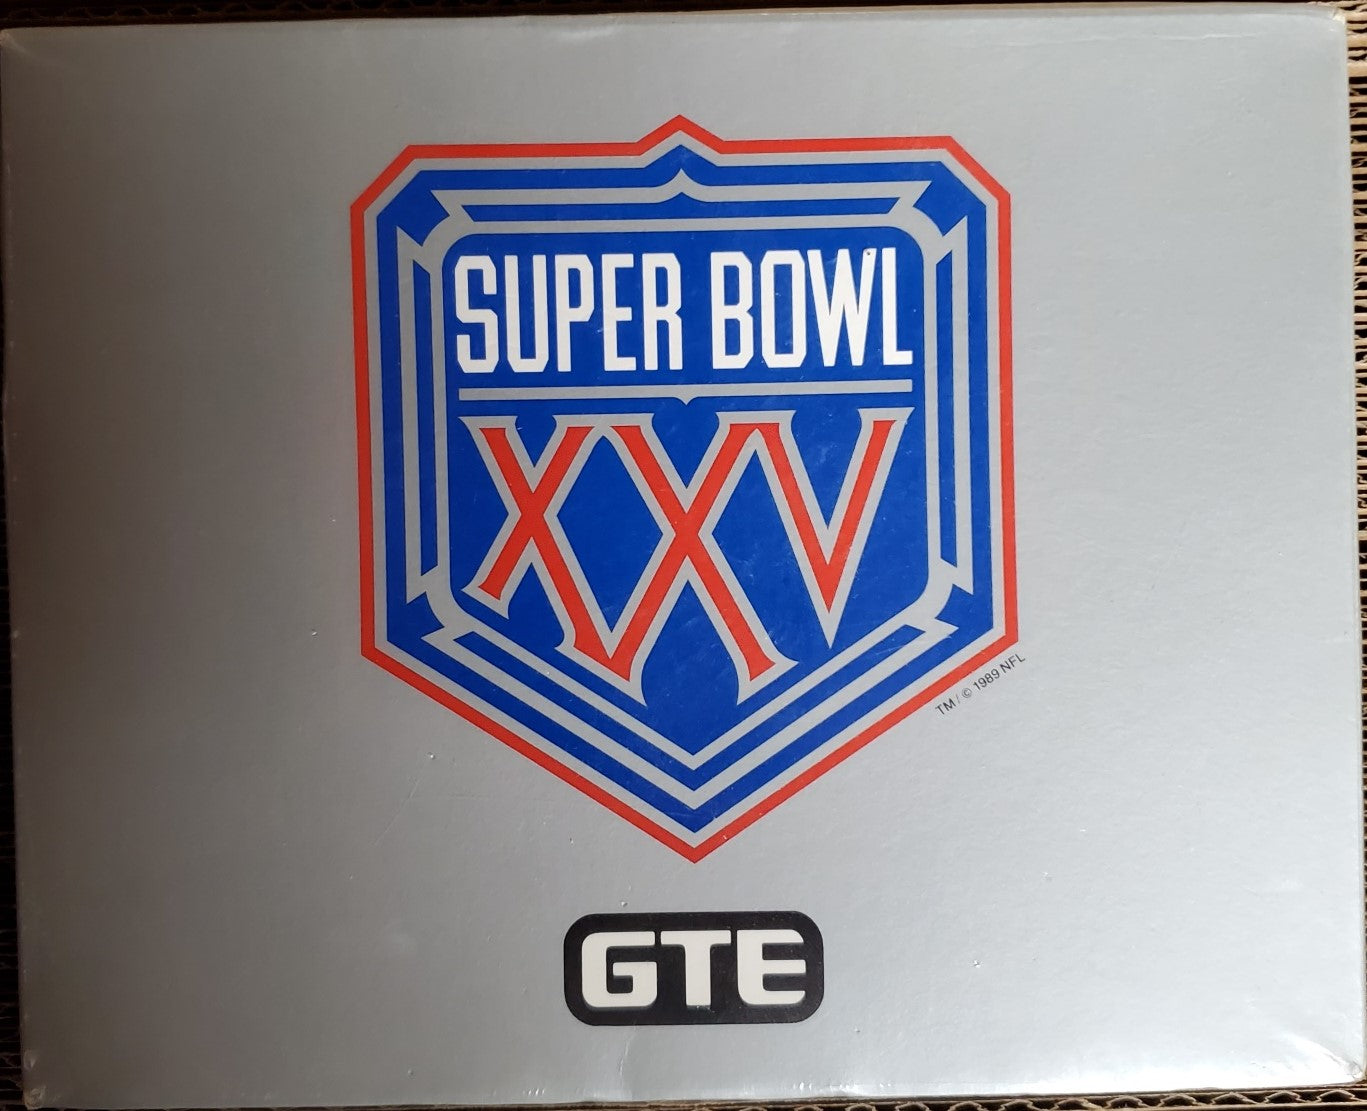 NFL Super Bowl XXV GTE Limited Edition Theme Art Cards